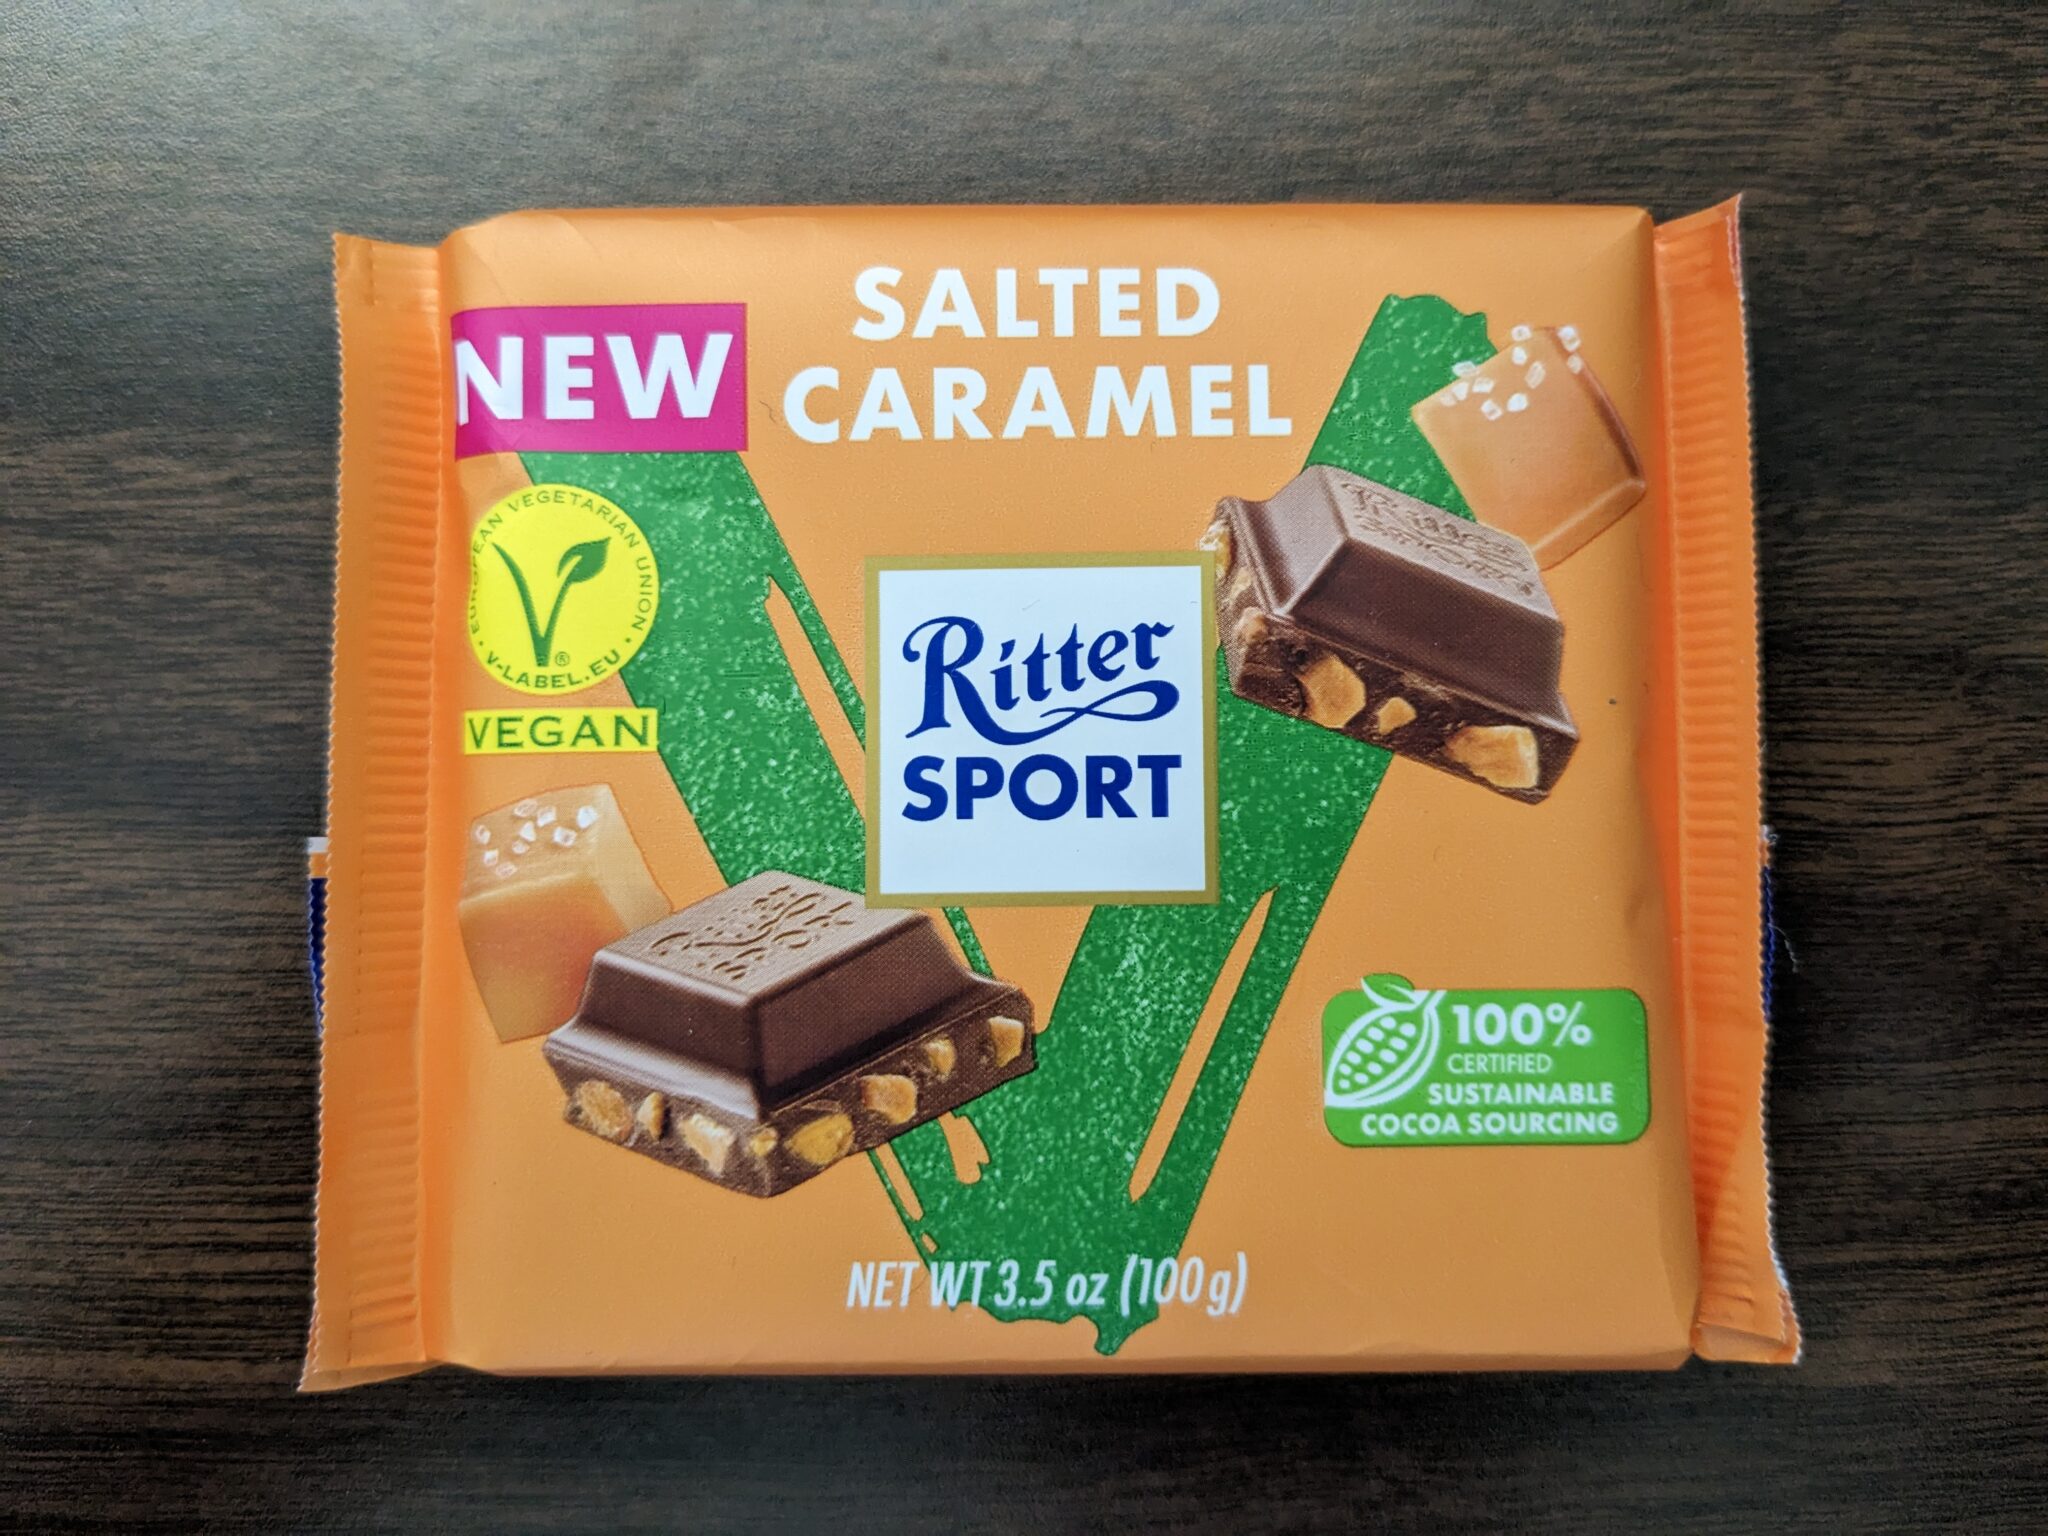 Ritter Sport – Vegan Salted Caramel